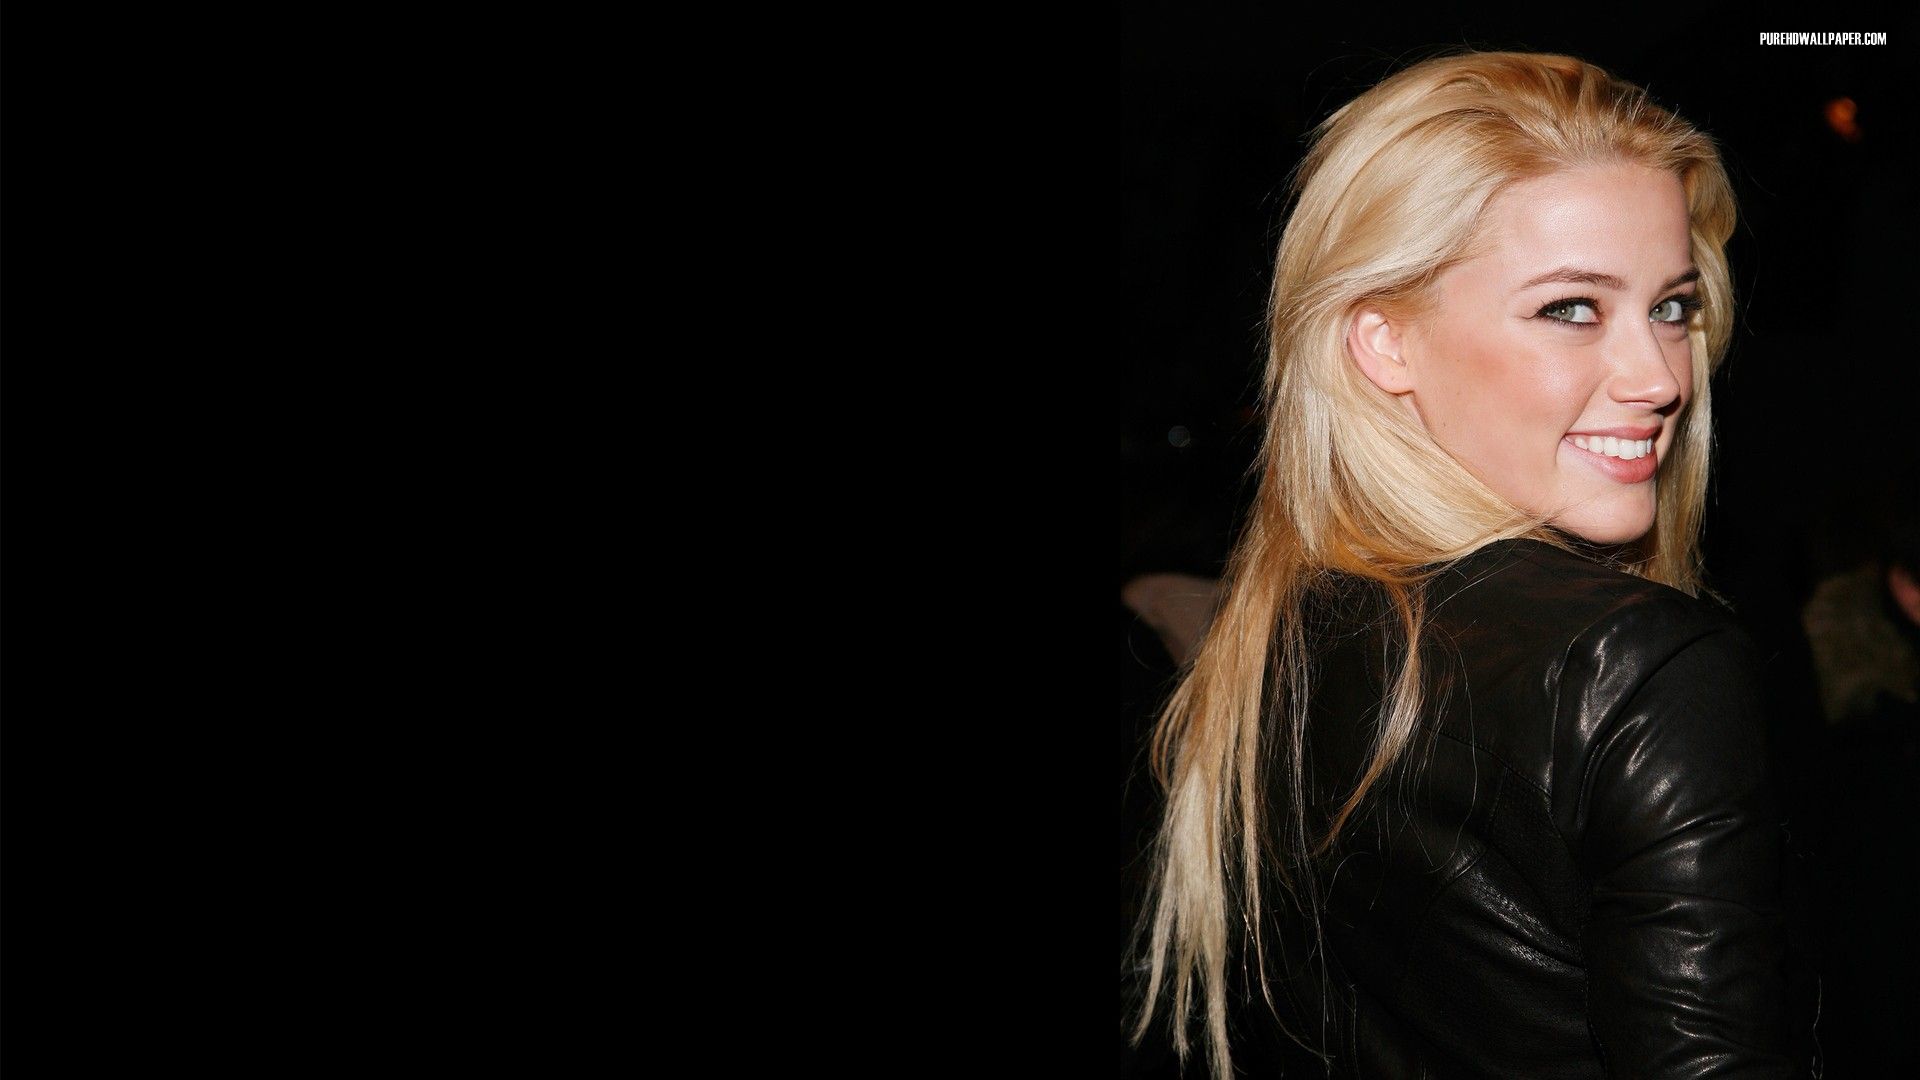 Amber Heard Stunning In Black Dress Wallpapers